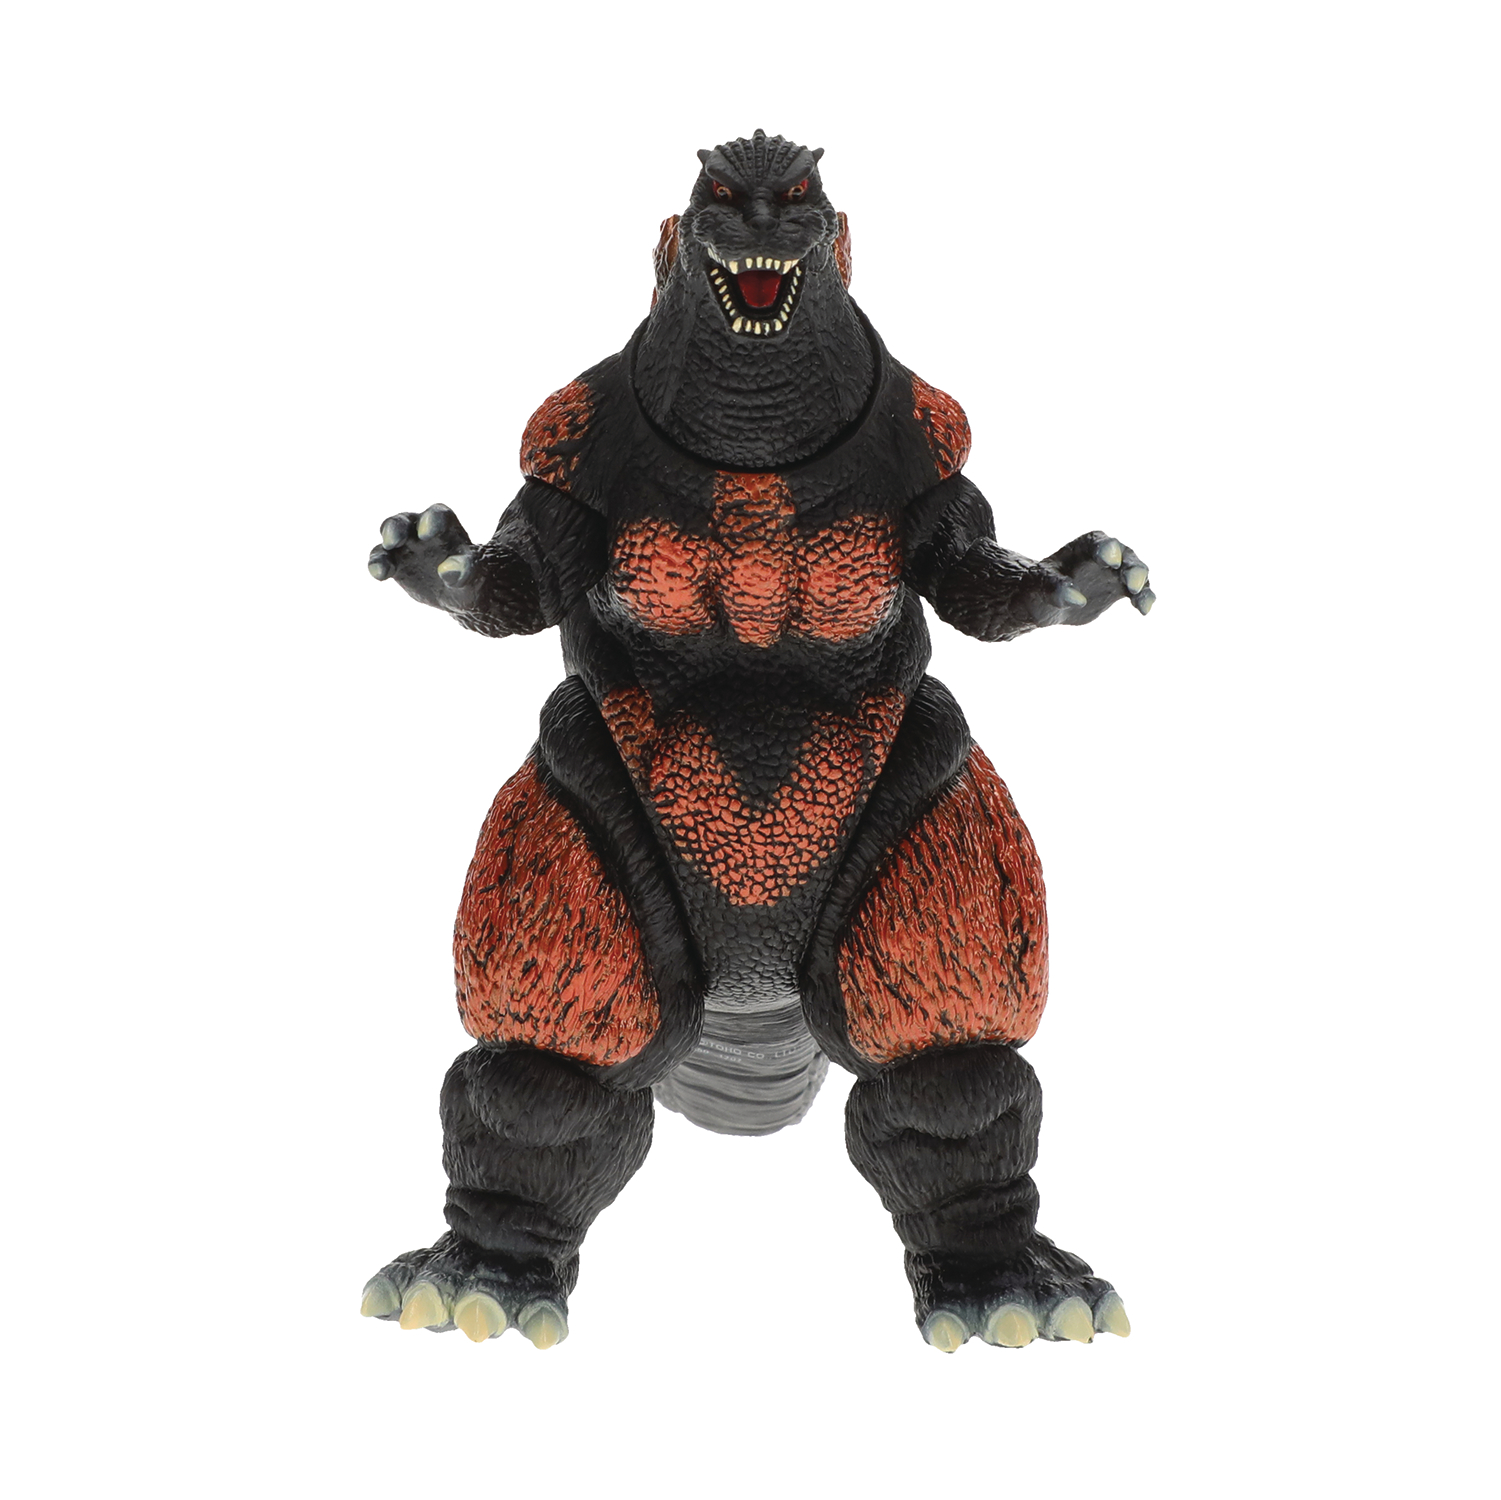 Burning Godzilla Bandai Movie Monster Series Vinyl Fig 